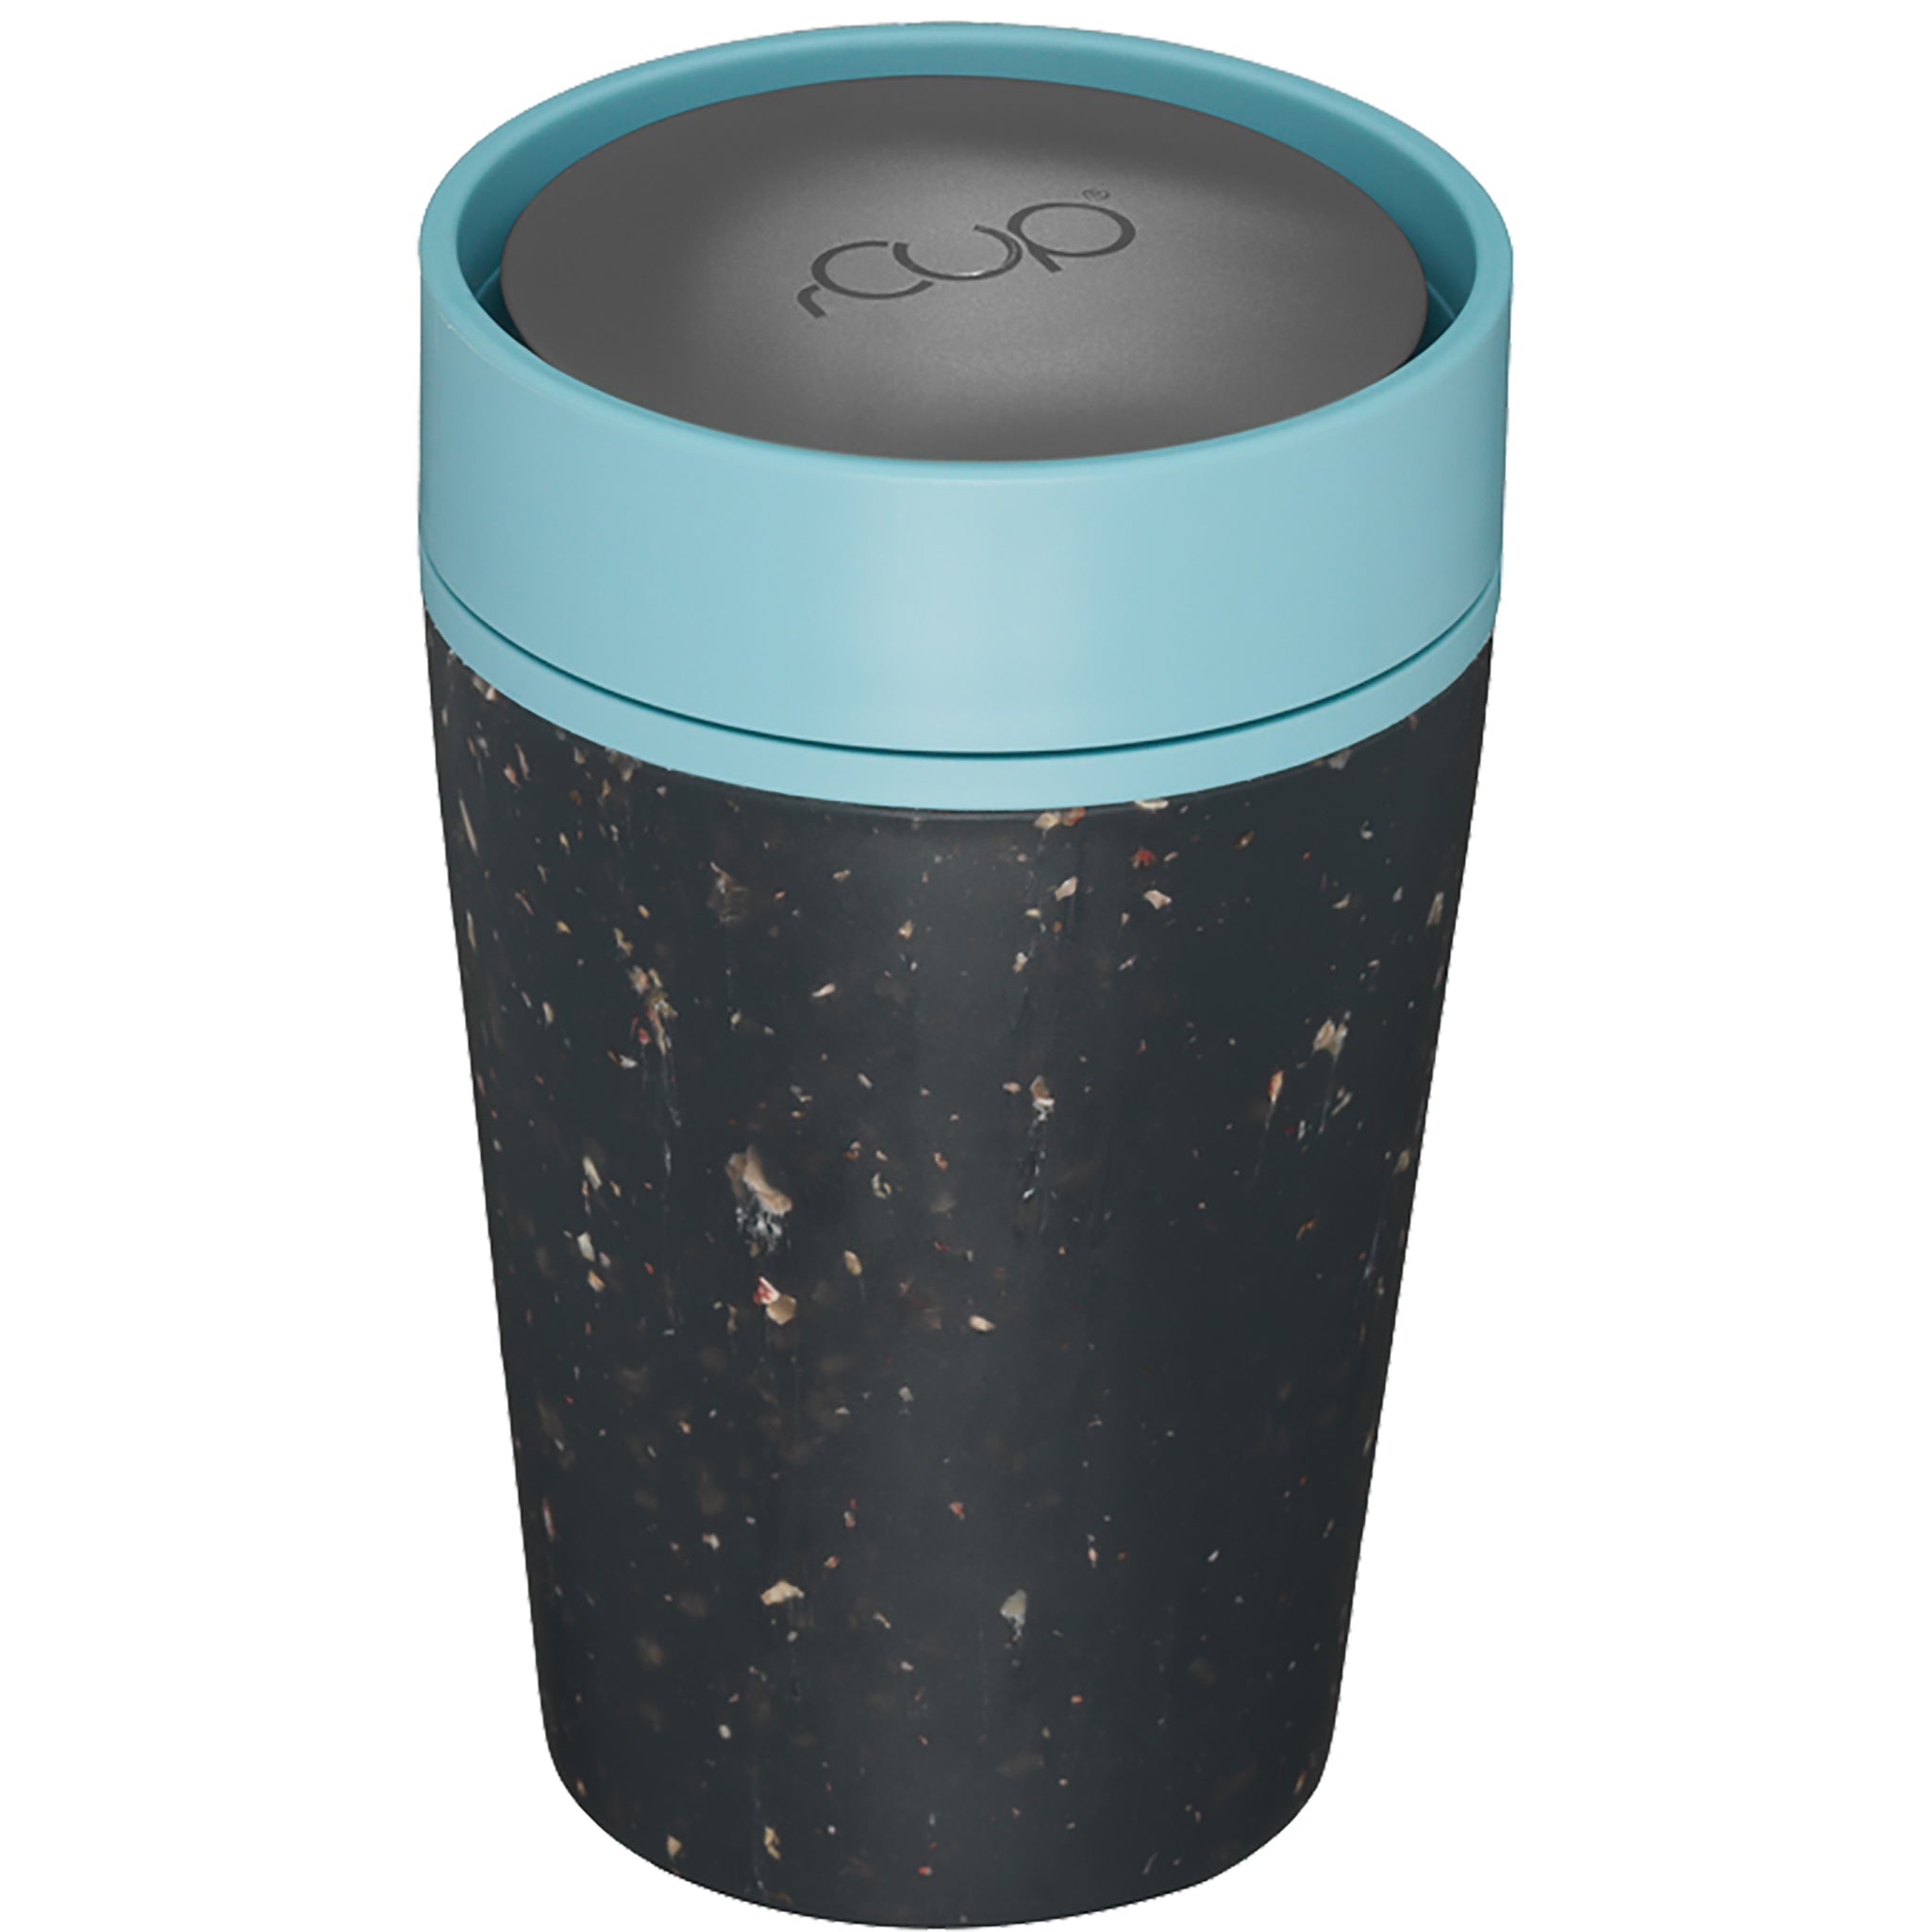 Reuseable Coffee Cup - Black & Teal 8oz - mypure.co.uk